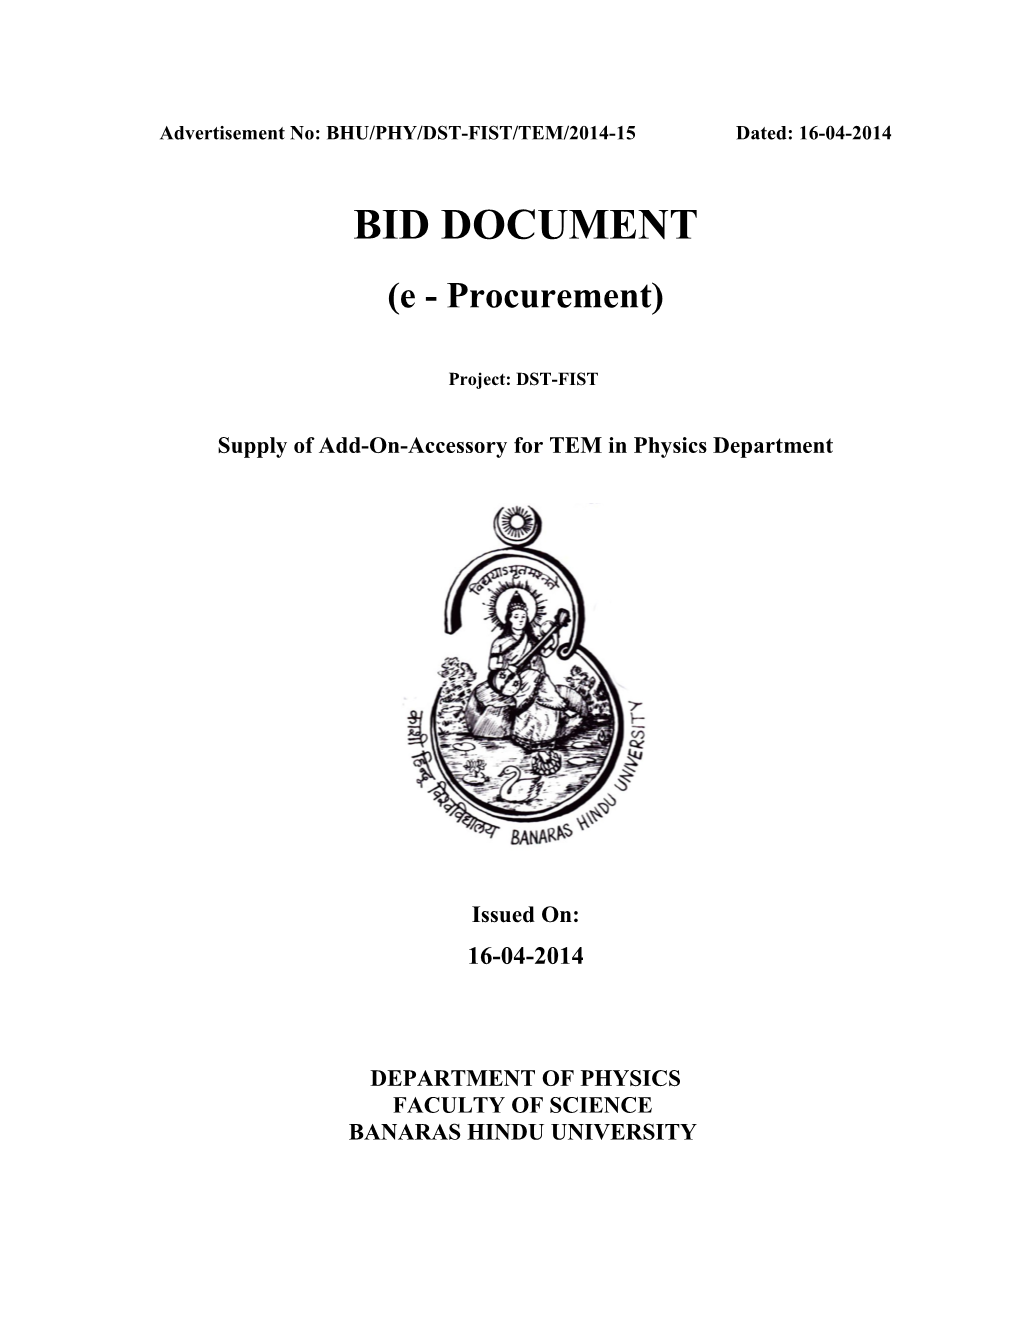 Standard Bidding Documents s5